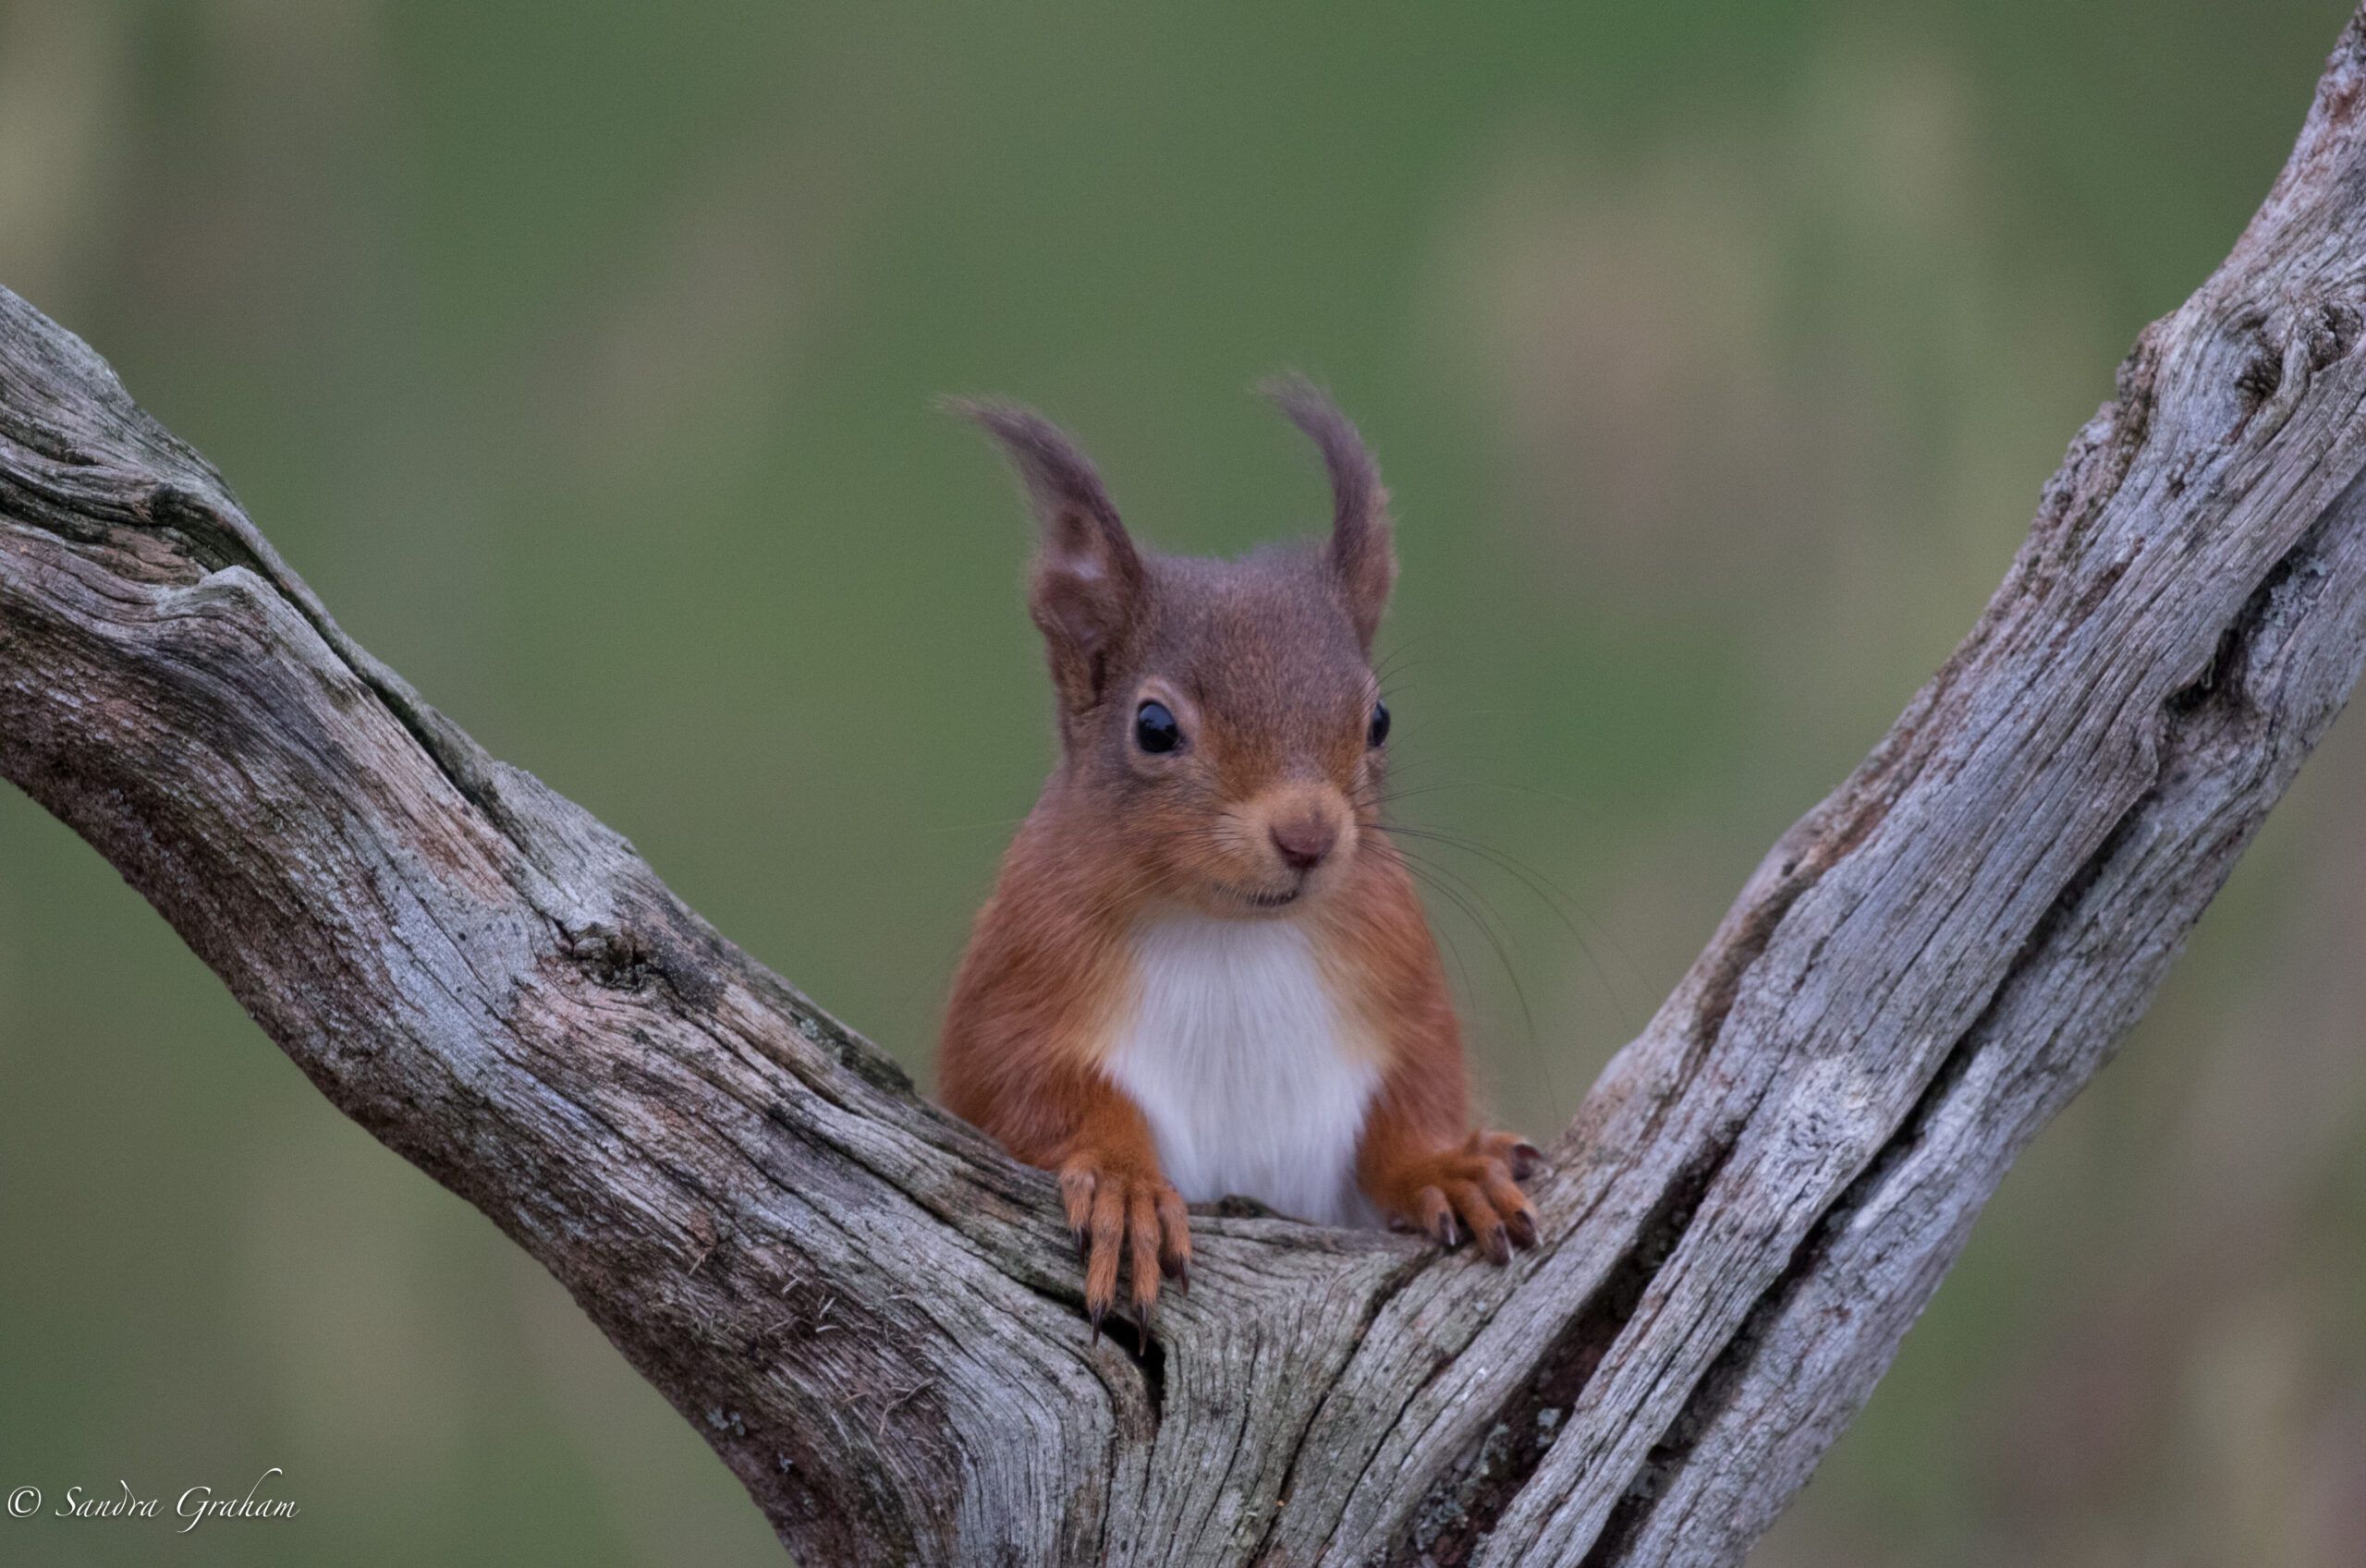 Red-Squirrel-Ardfern-©-Sandra-Graham-scaled-aspect-ratio-540-358